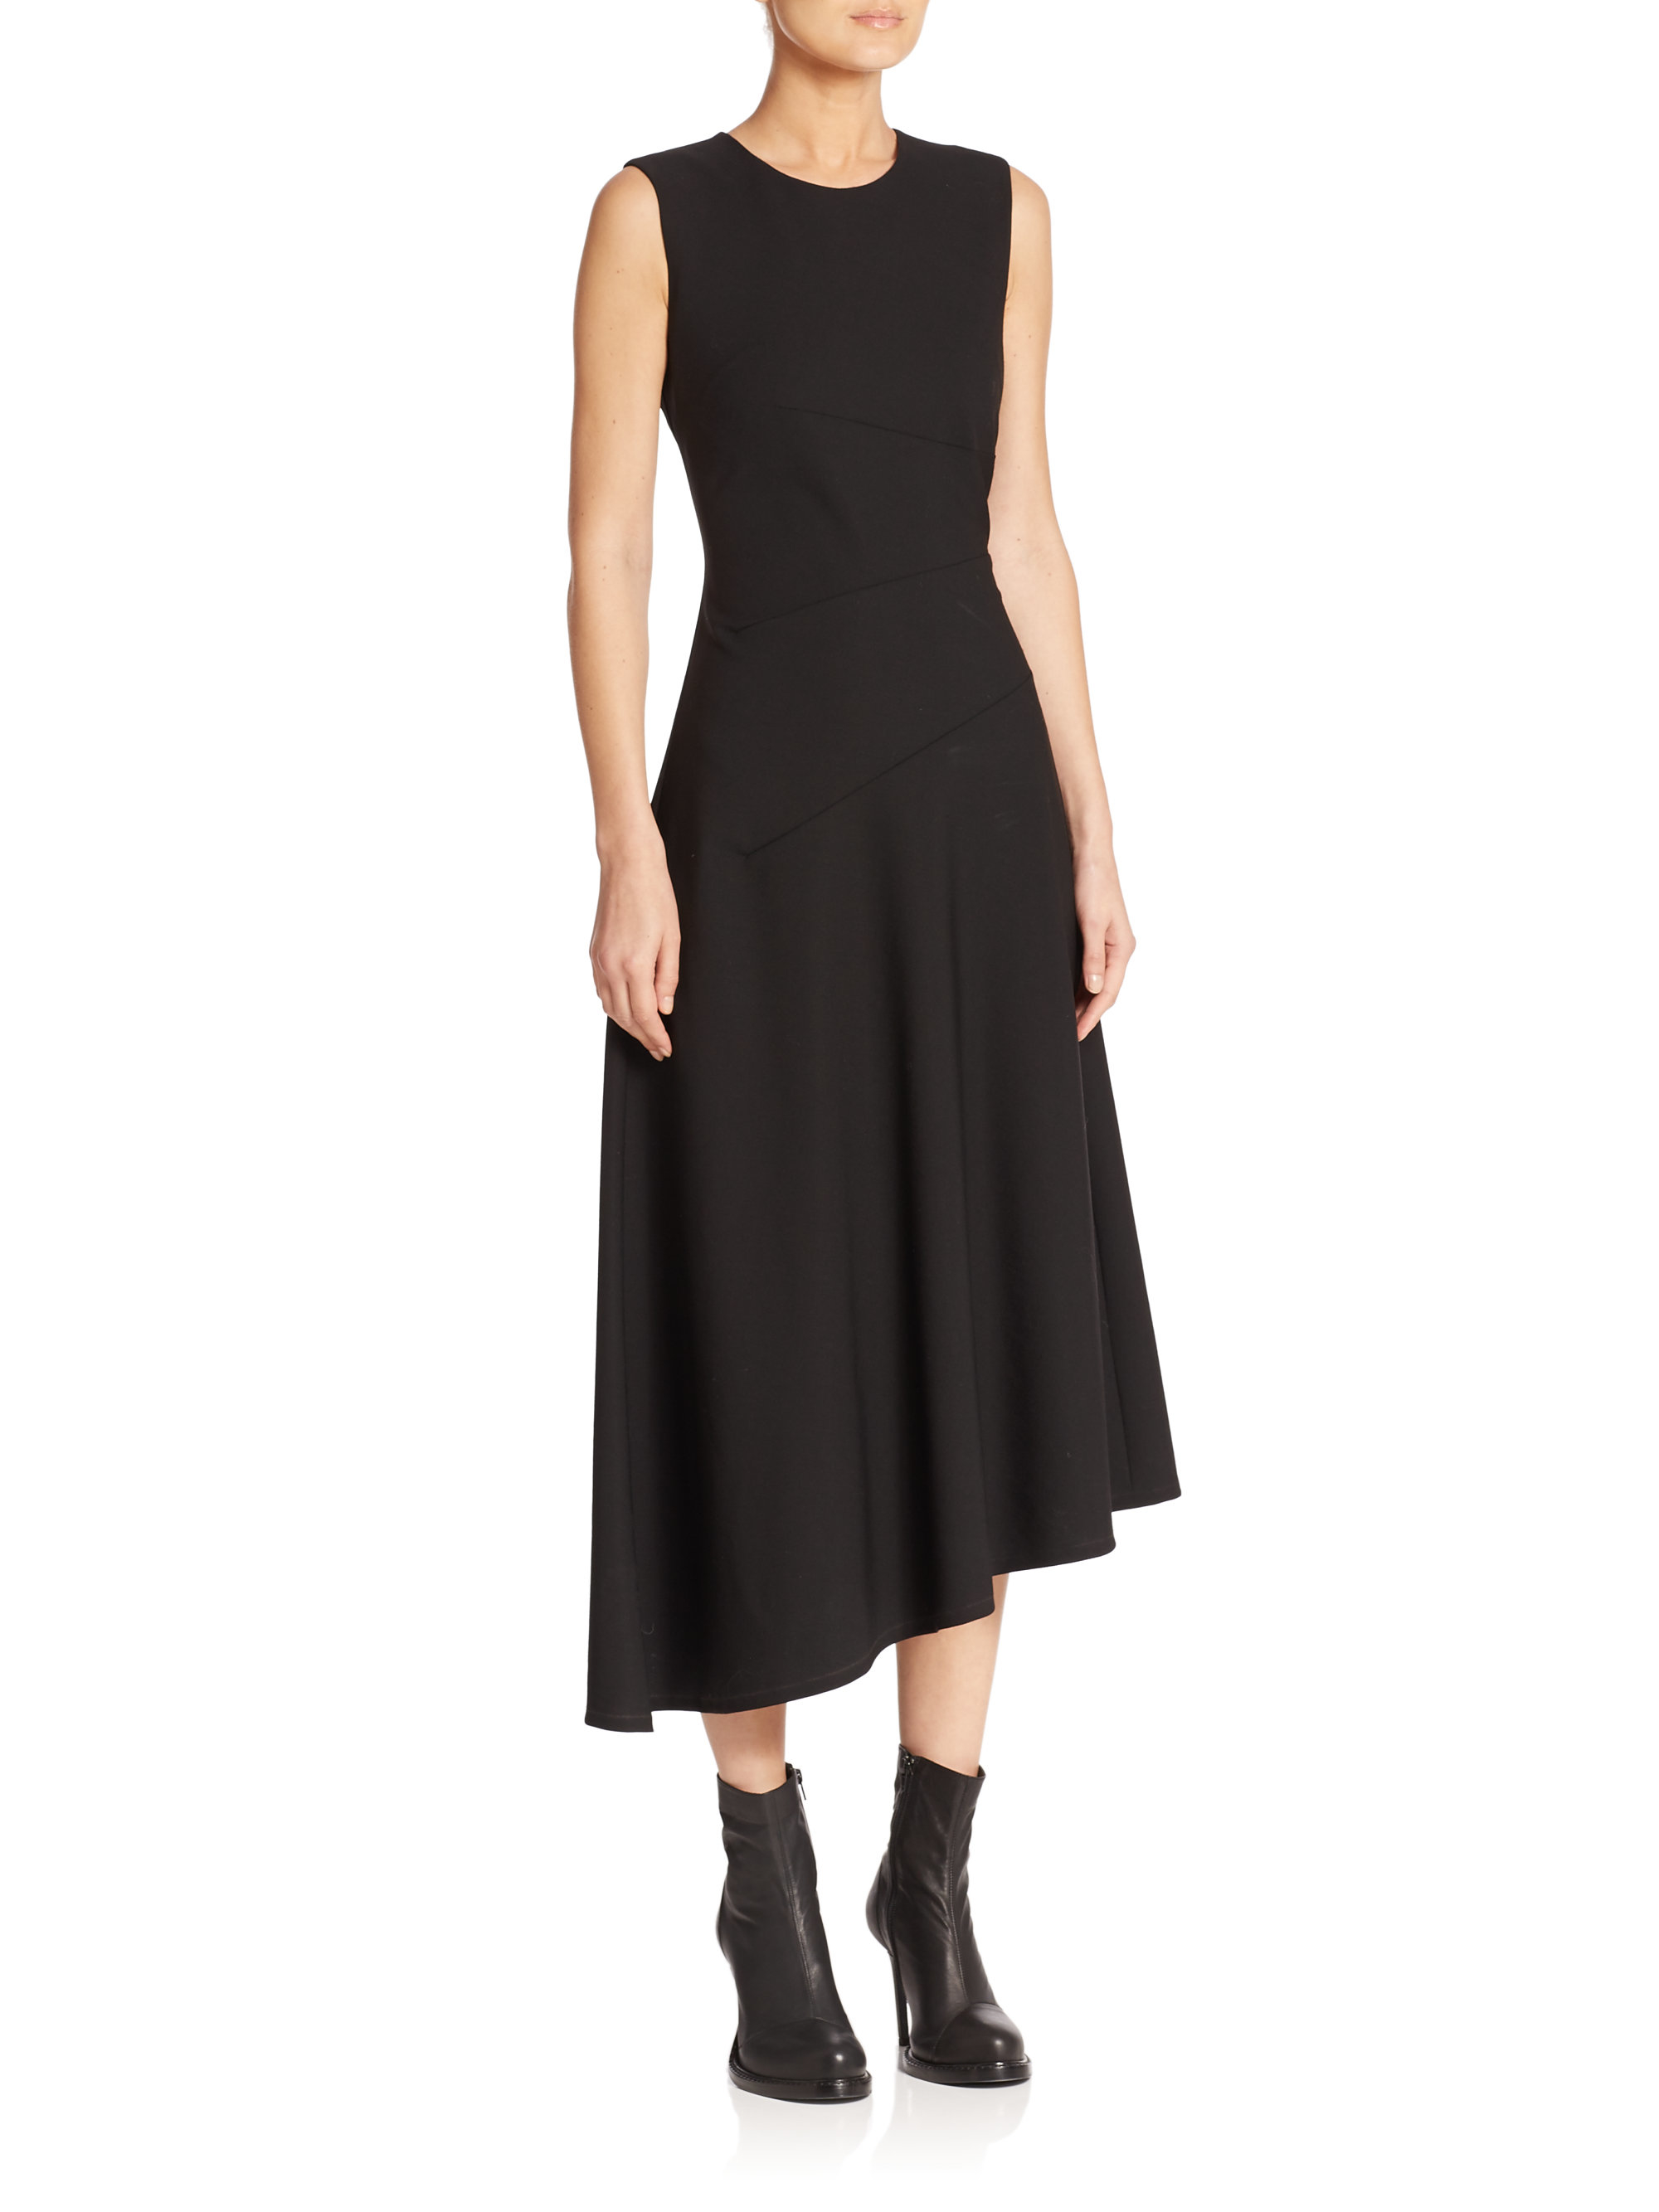 Lyst - Dkny Asymmetrical Midi Wool Dress in Black